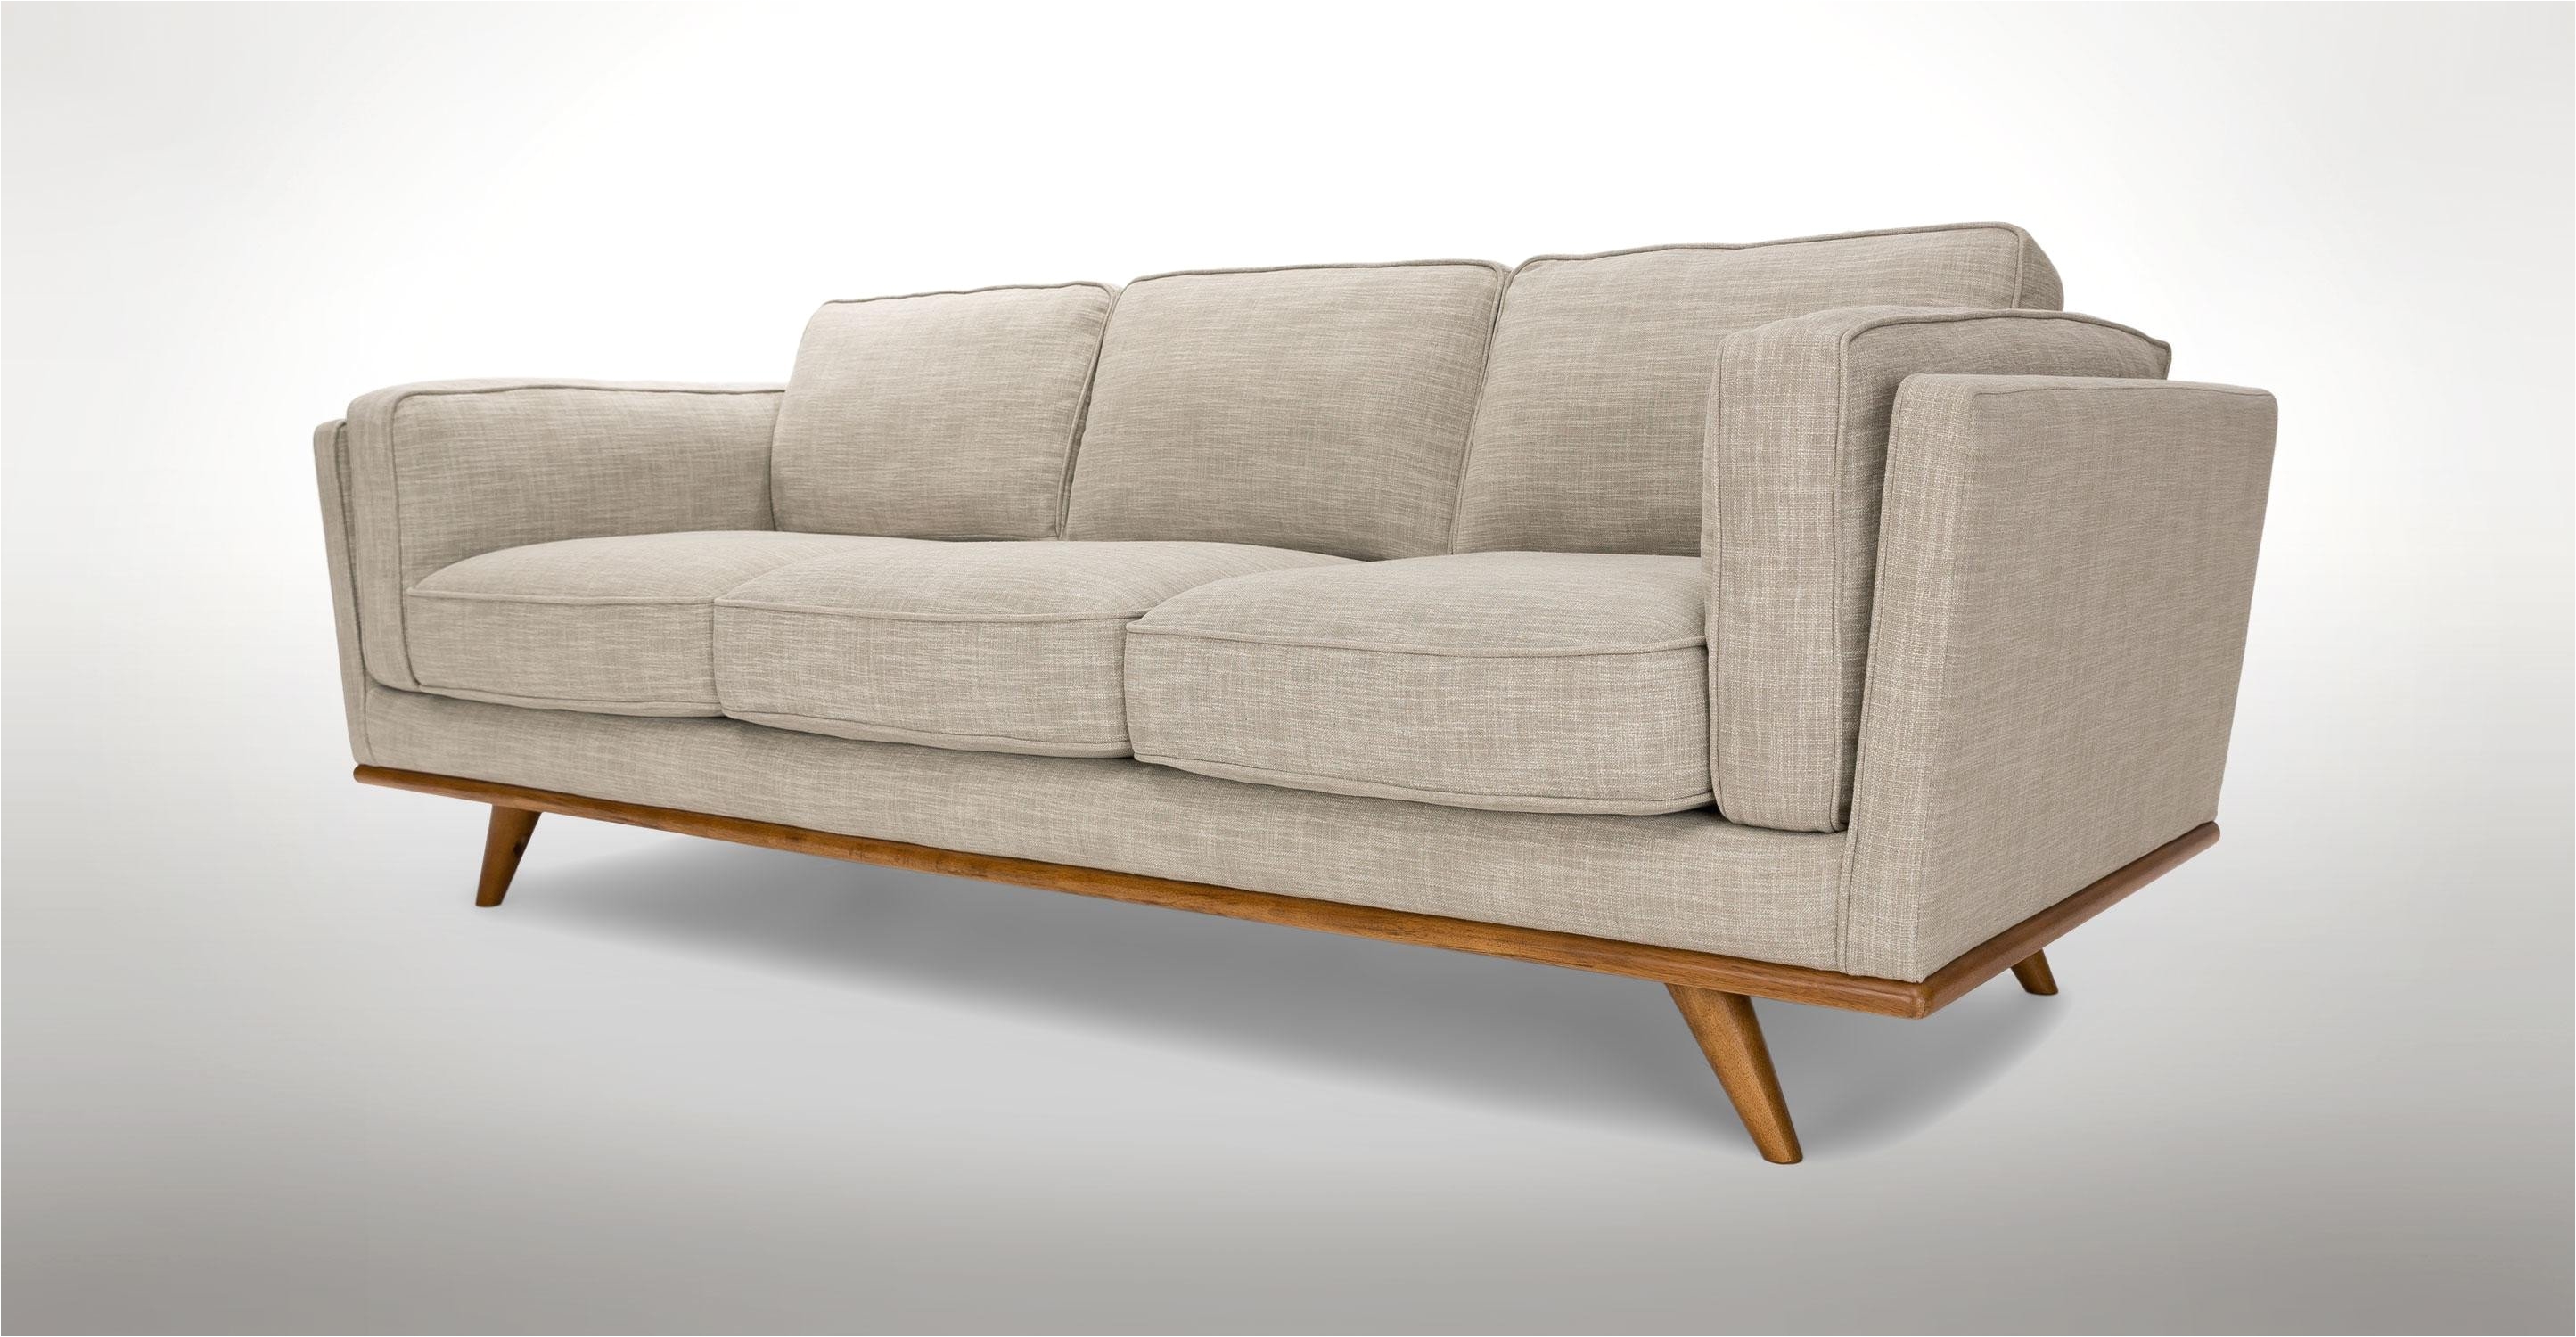 Apt Size Leather sofa élégant Full Size Sleeper sofa Dimensions Best Apartment Size sofa Amazon